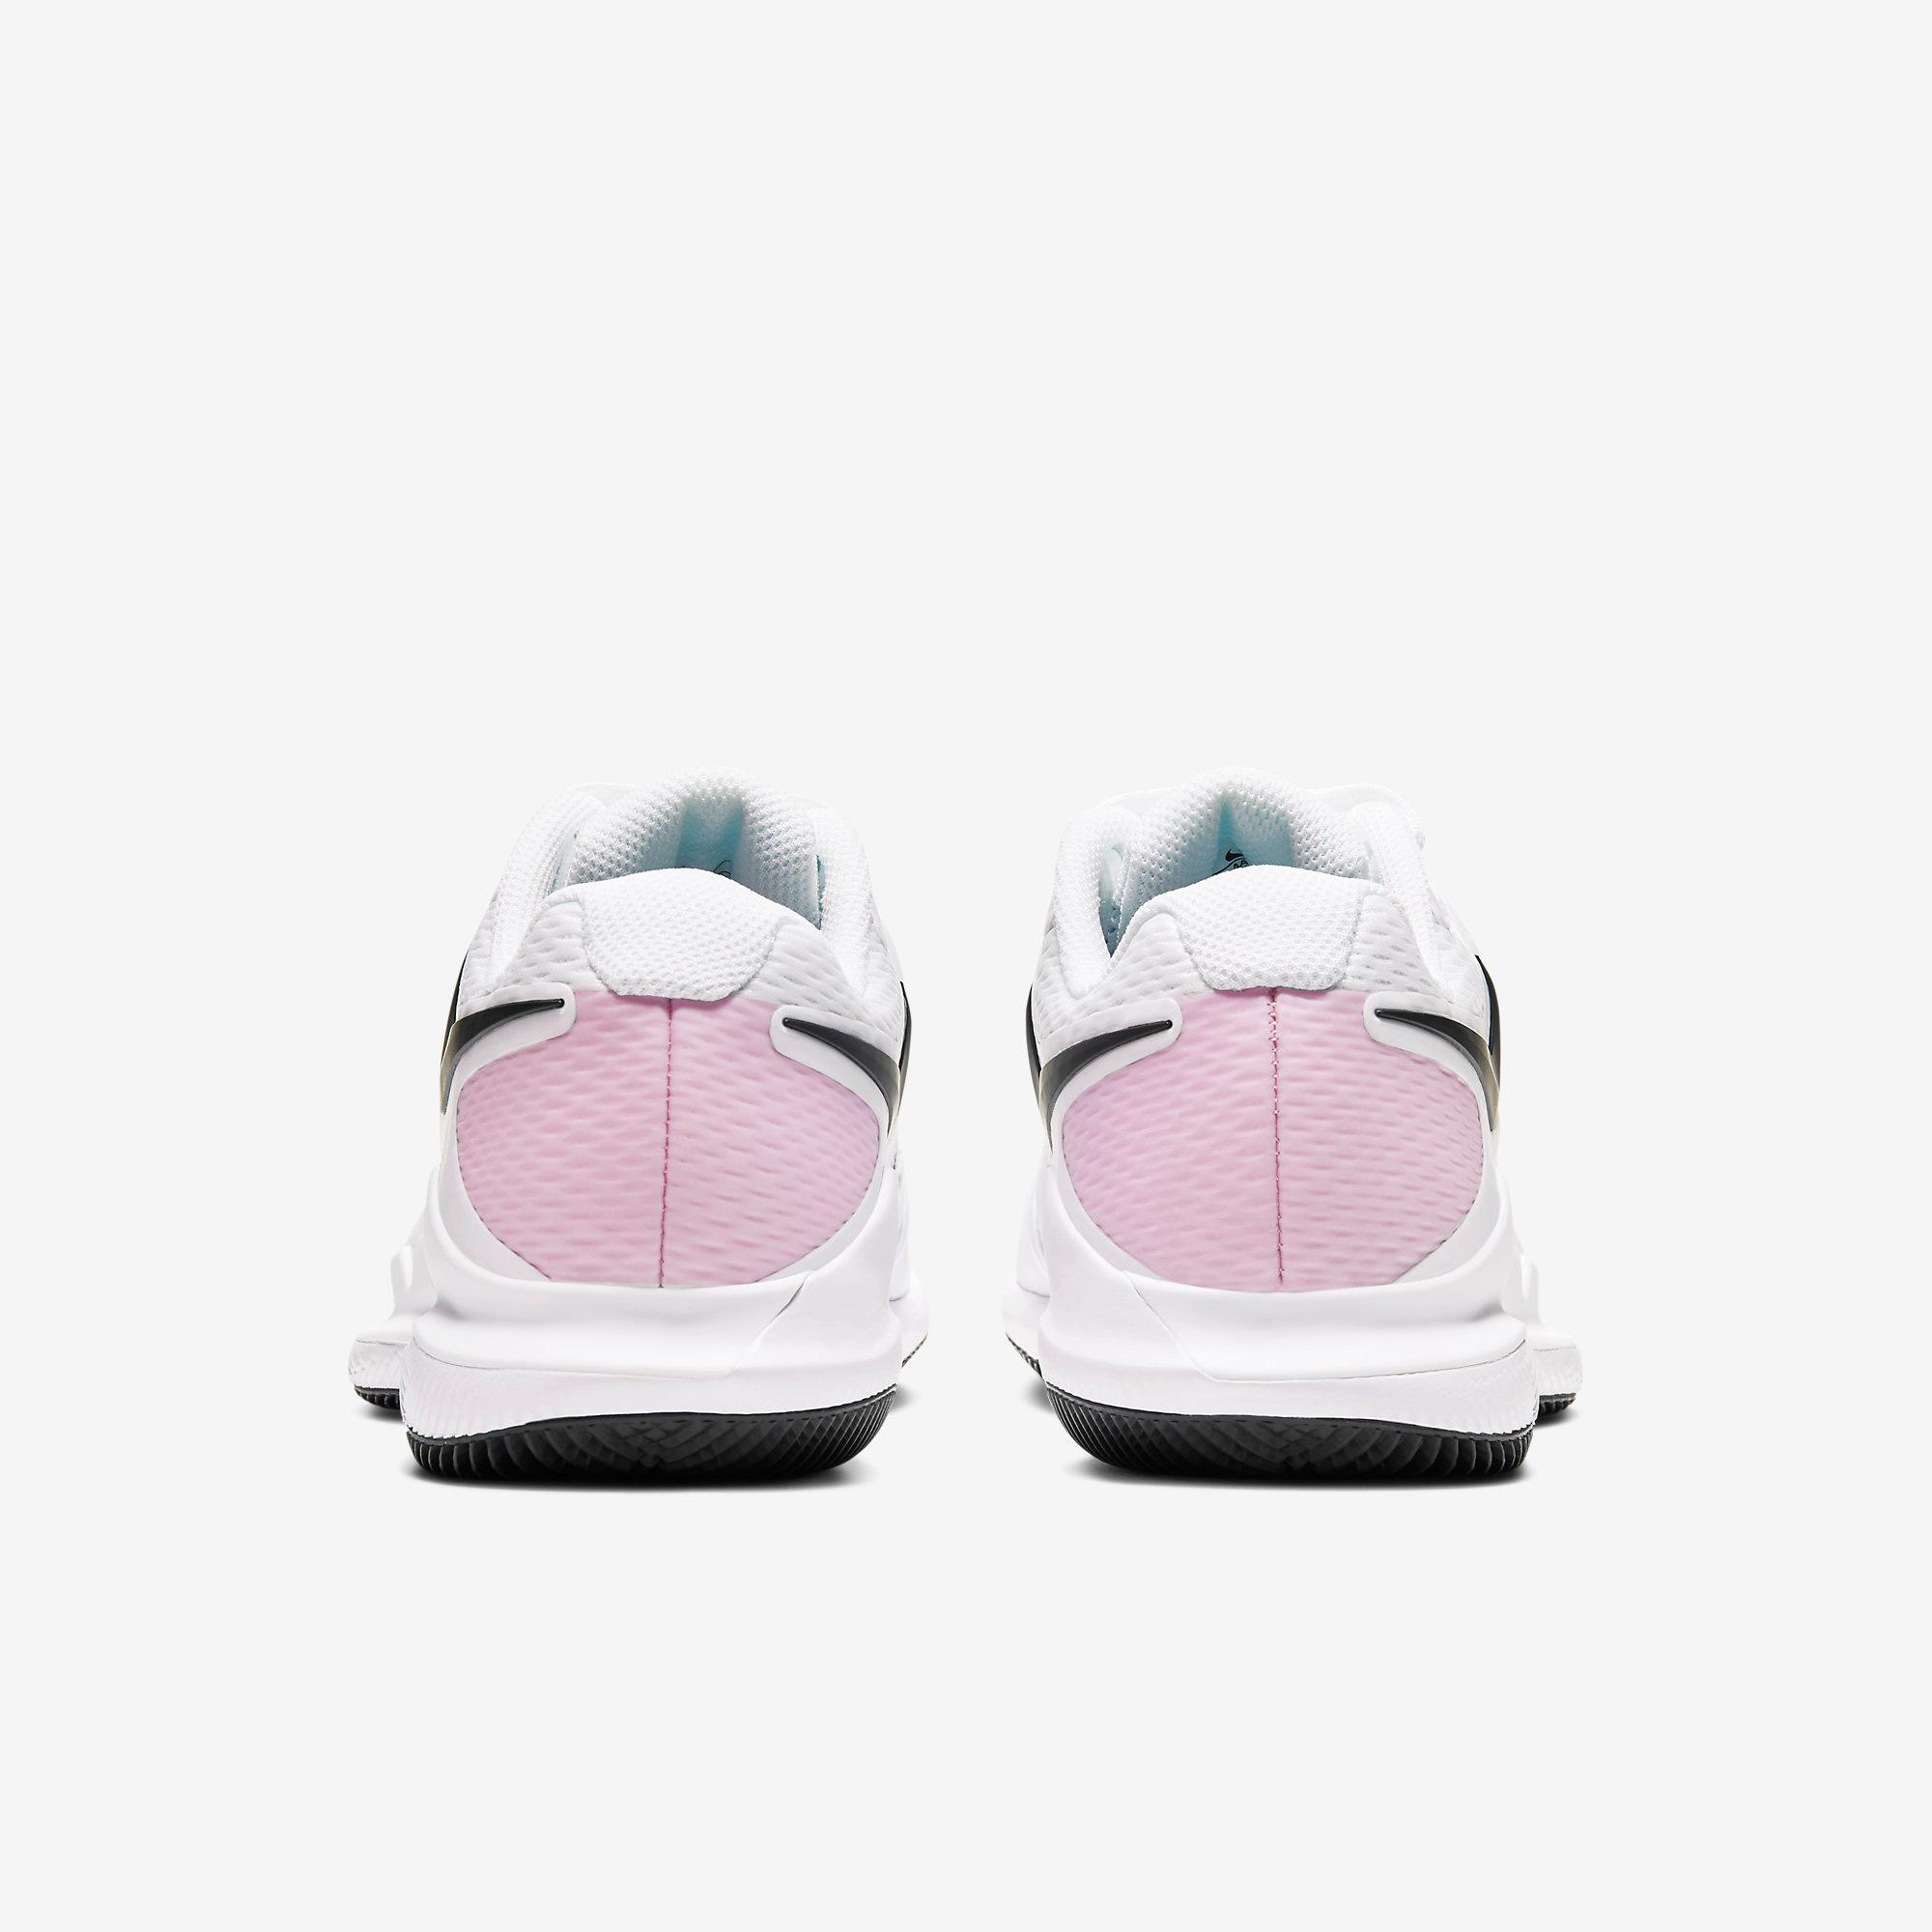 Nike Womens Air Zoom Vapor X Tennis Shoes - White/Foam Pink ...